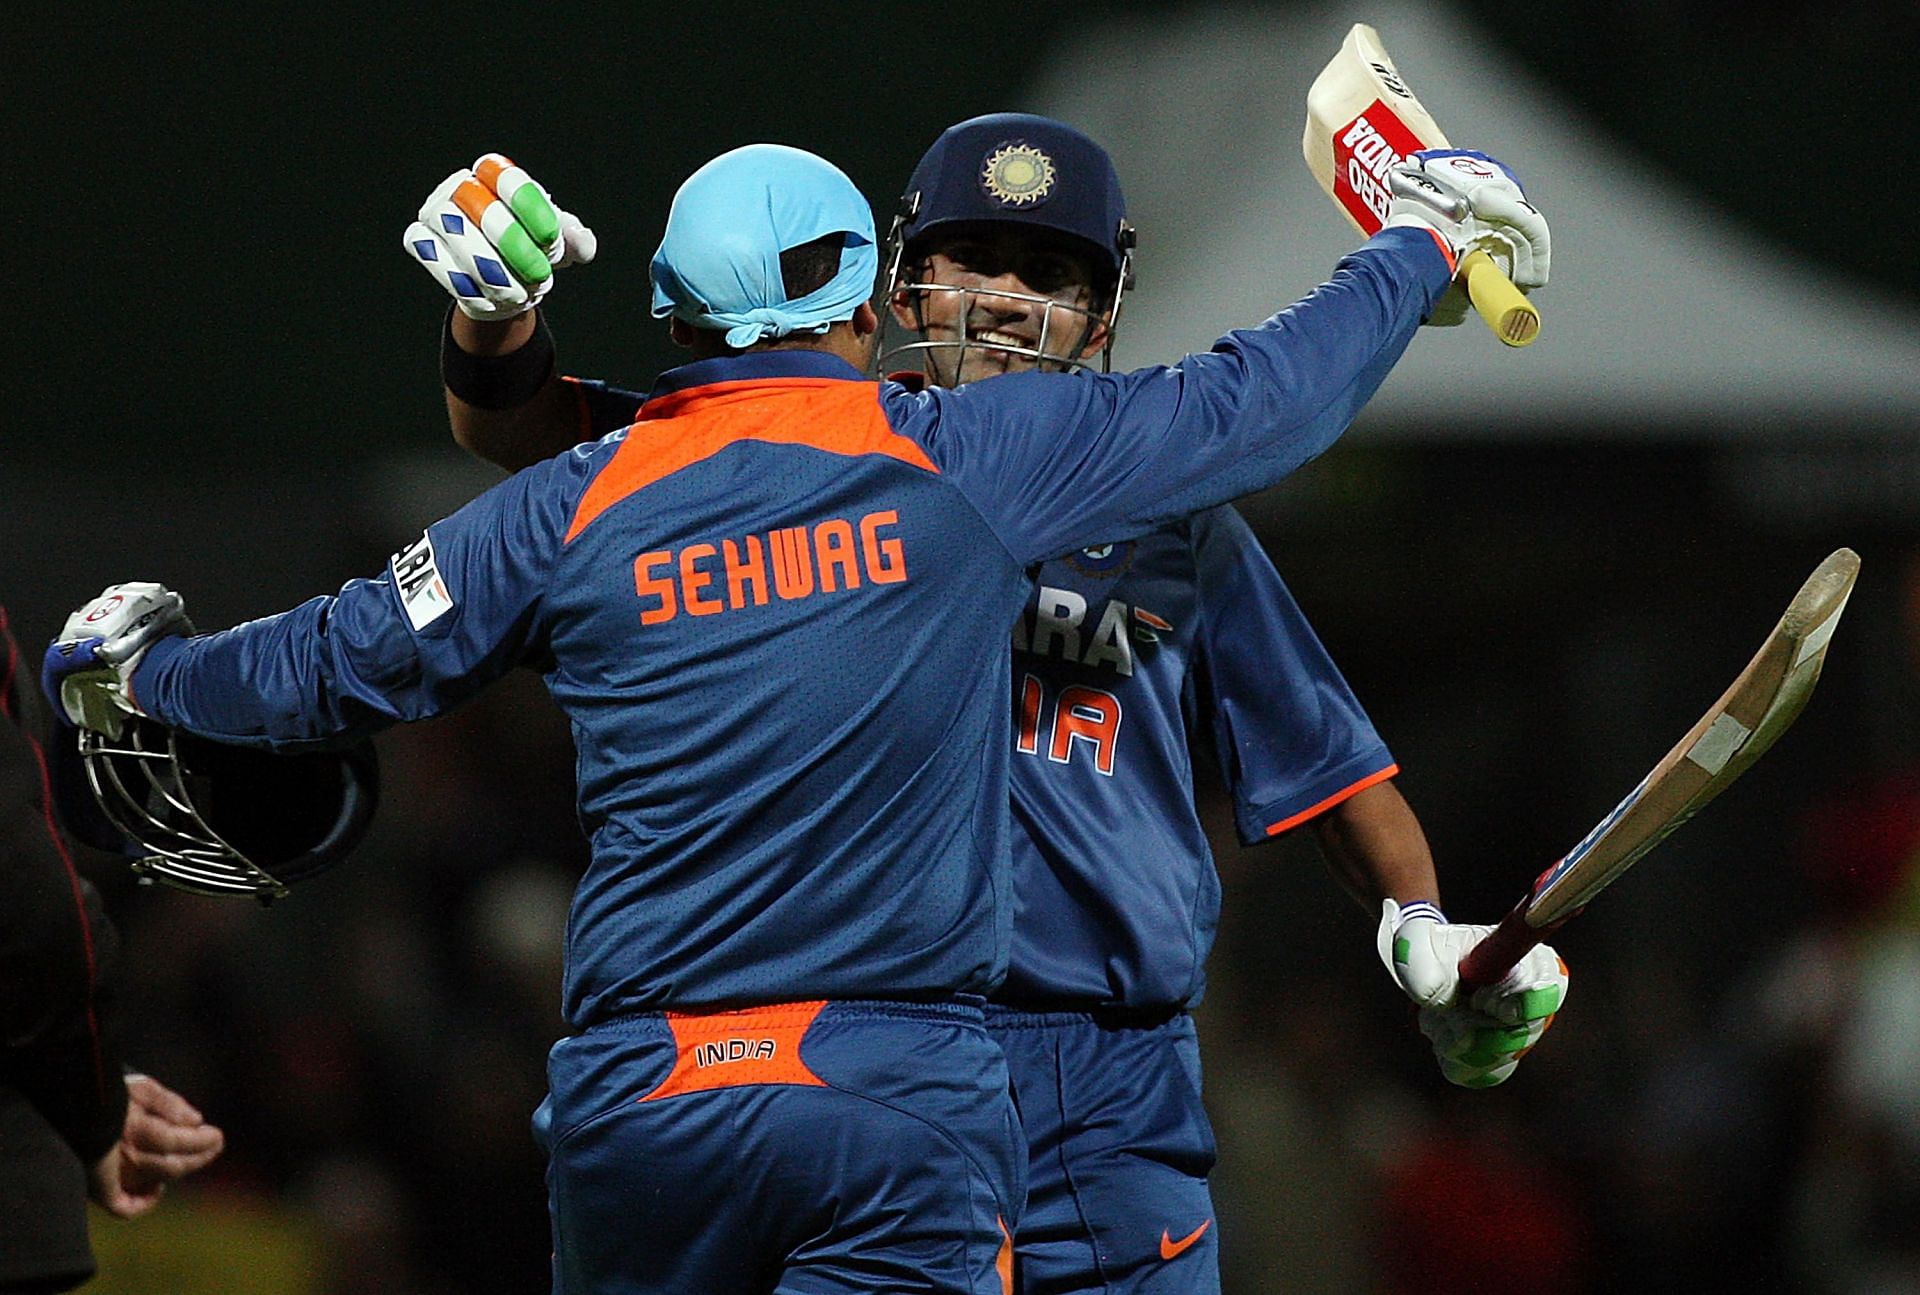 New Zealand v India - 4th ODI